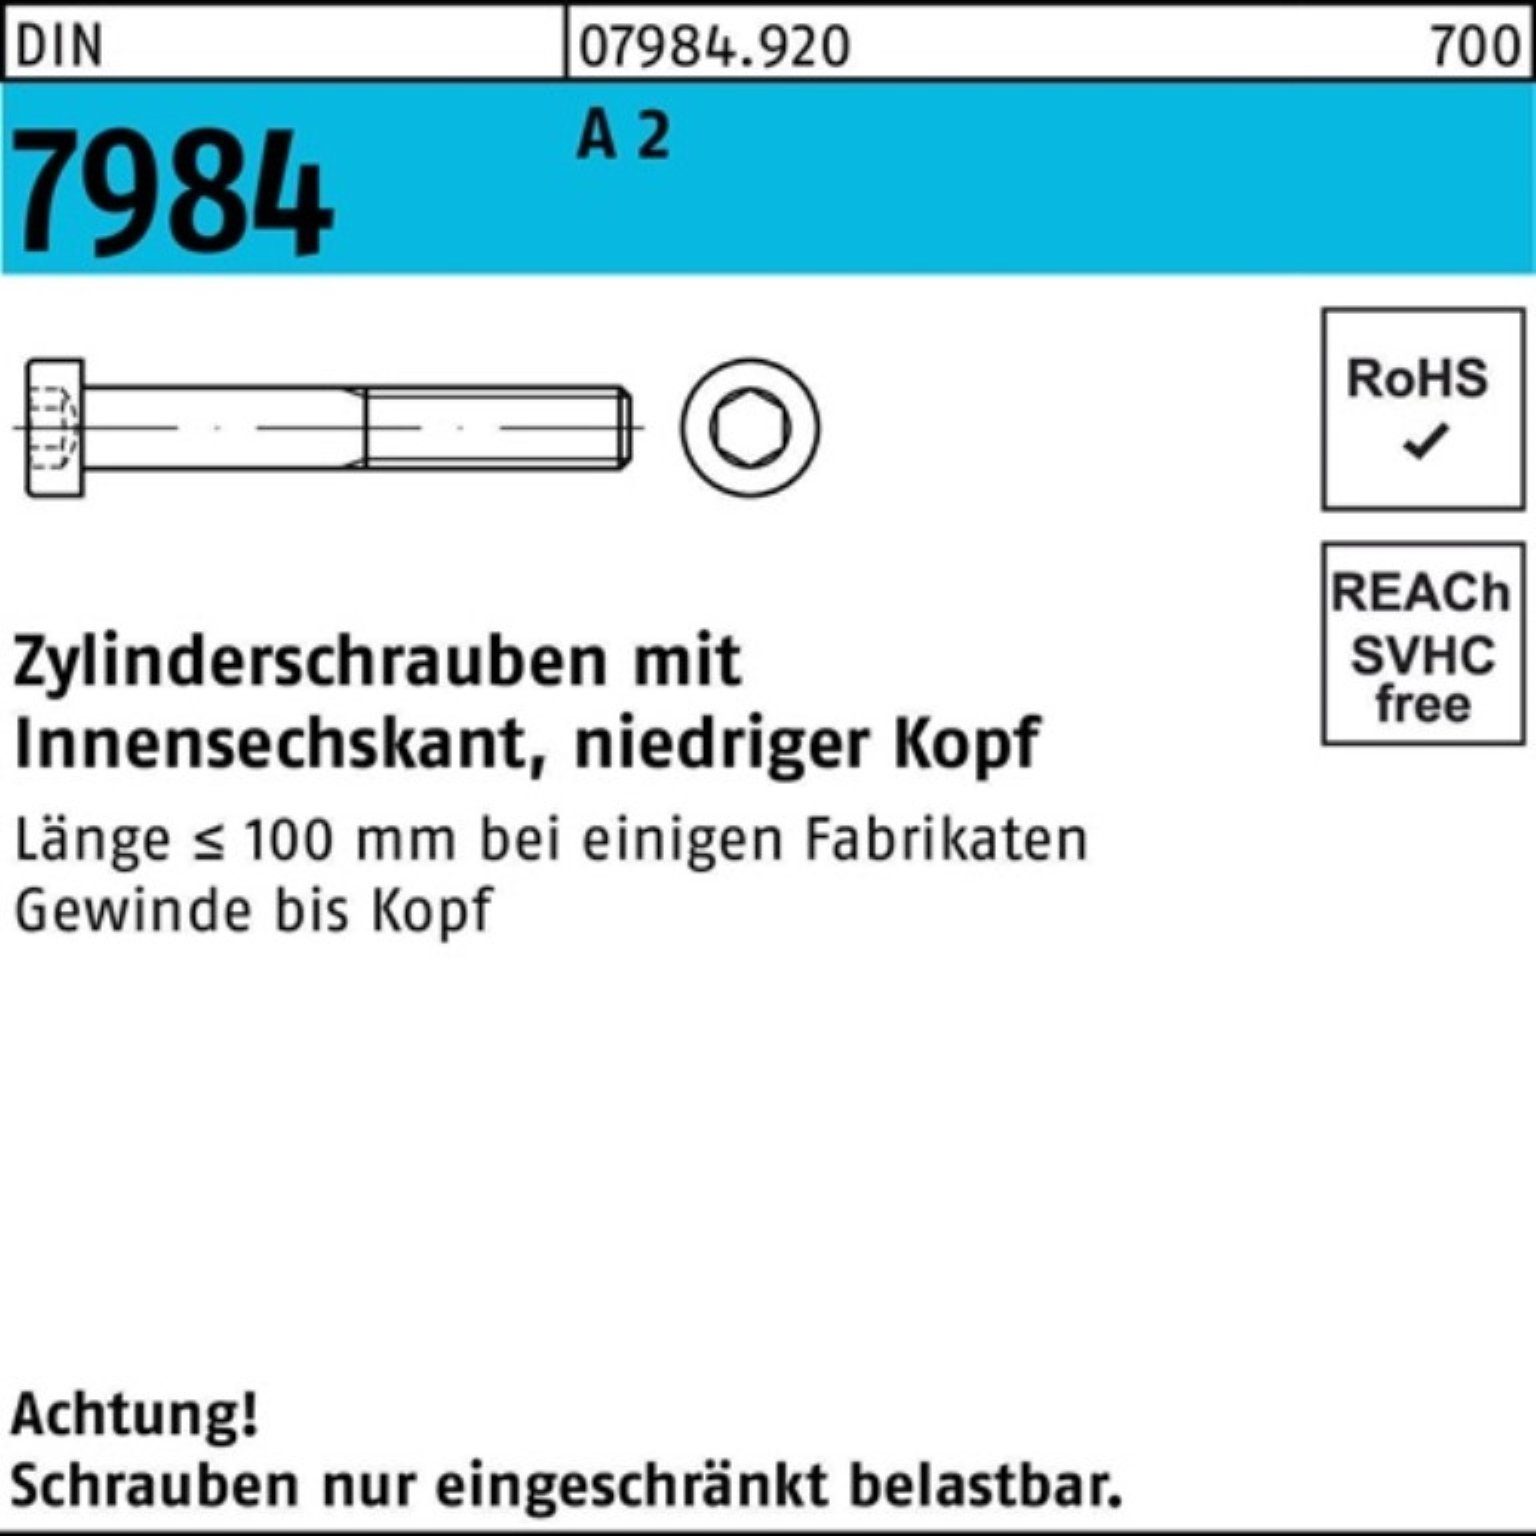 A 200 6 7984 Reyher DI Zylinderschraube M3x Pack Zylinderschraube Stück 200er Innen-6kt 2 DIN